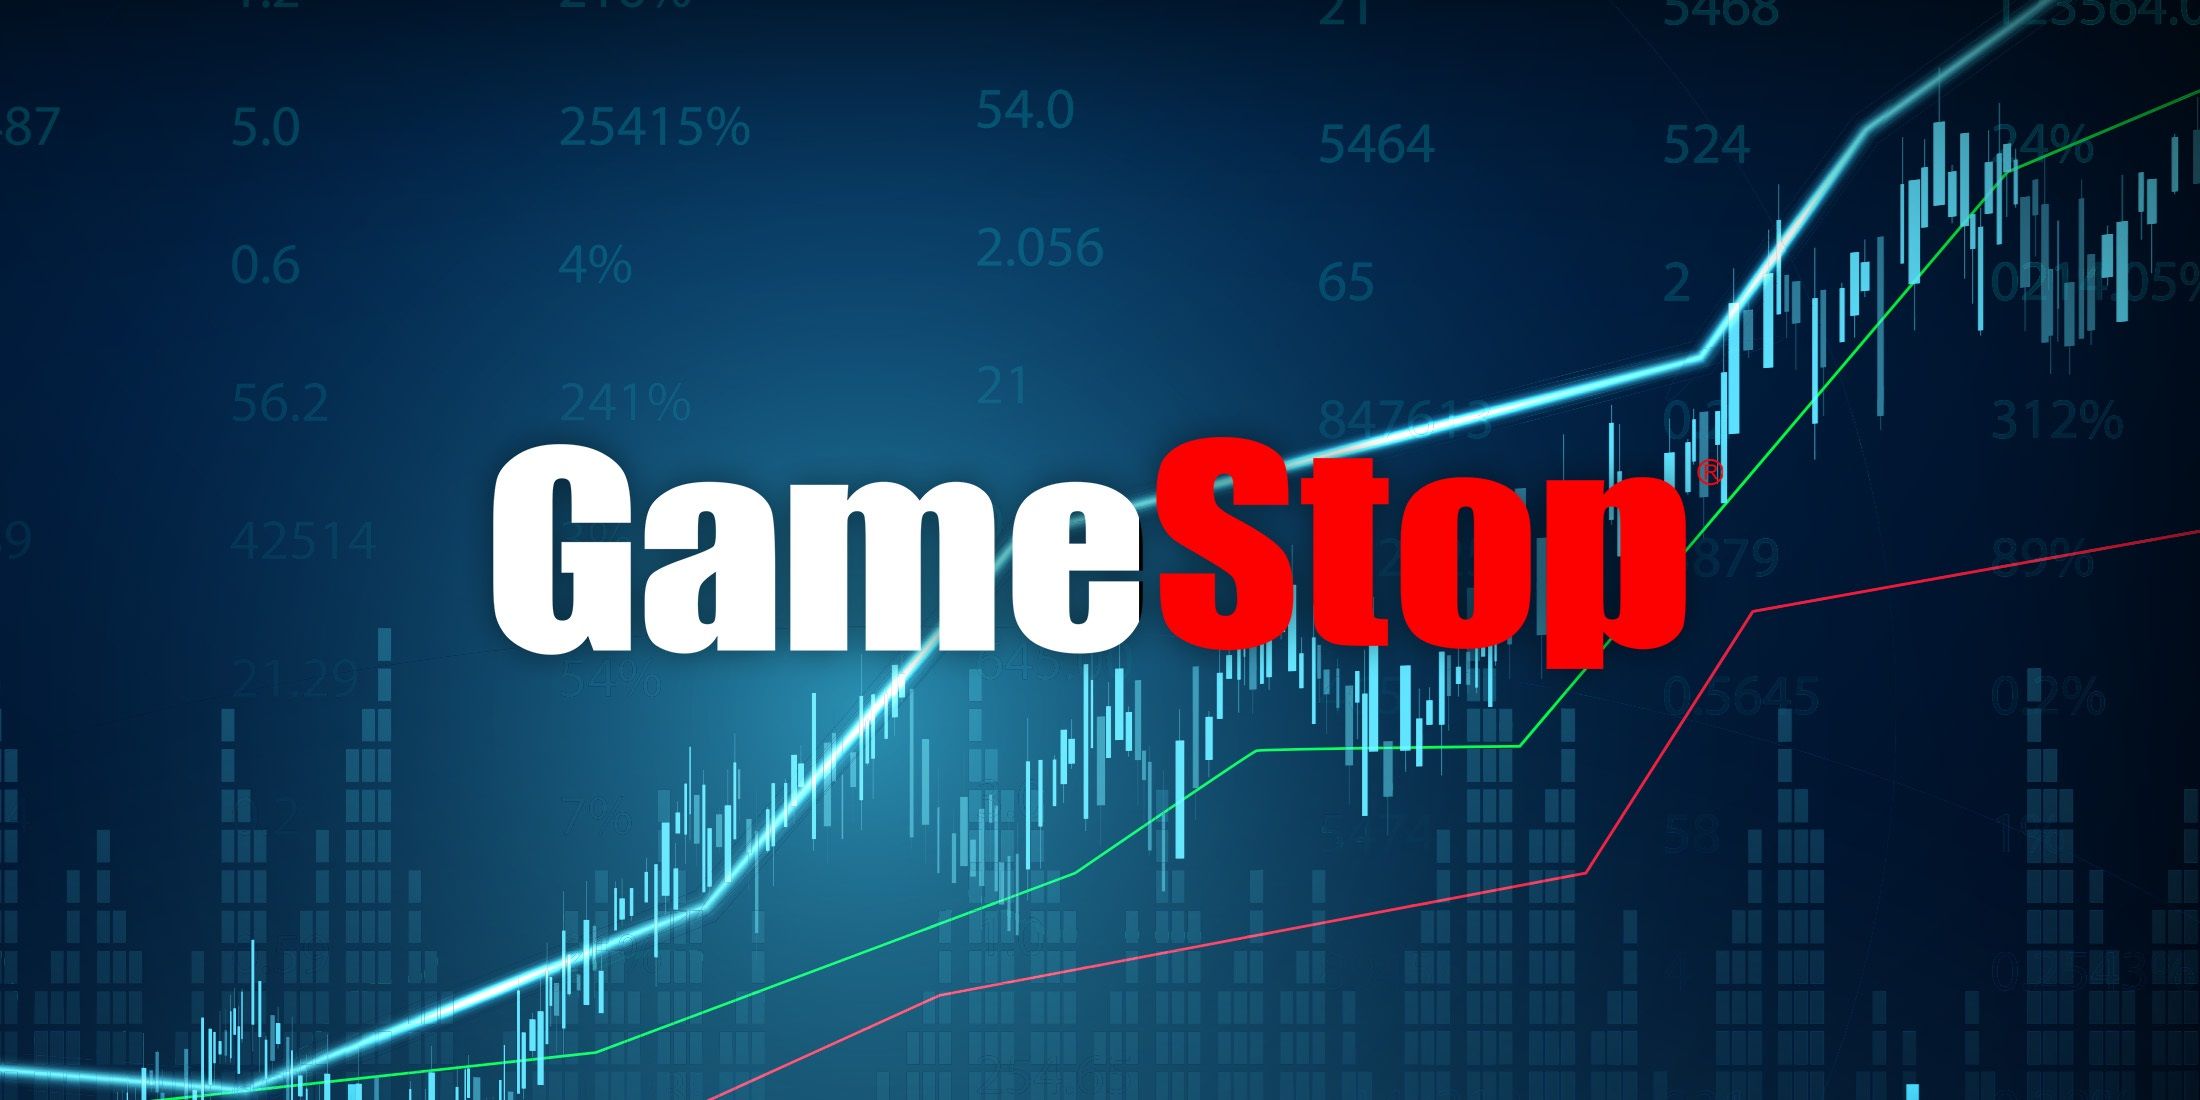 GameStop Stock Value Surges